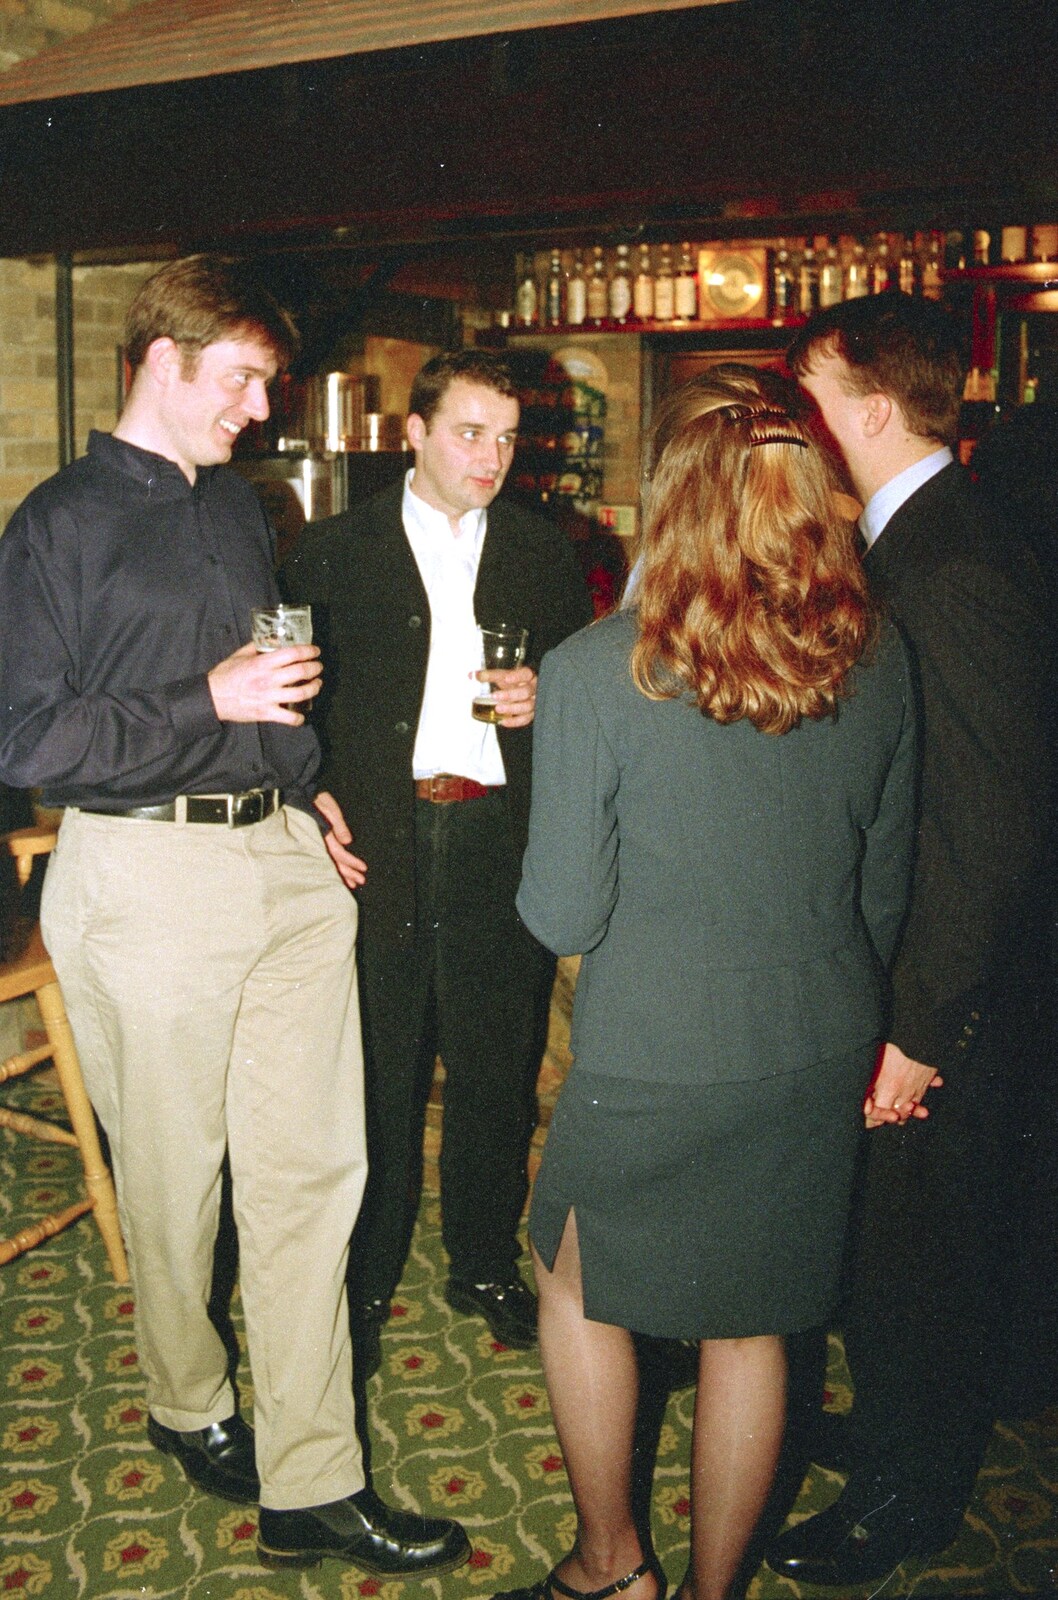 Stef and Dan at the bar from Paula's 3G Lab Wedding Reception, Huntingdon, Cambridgeshire - 4th September 2000